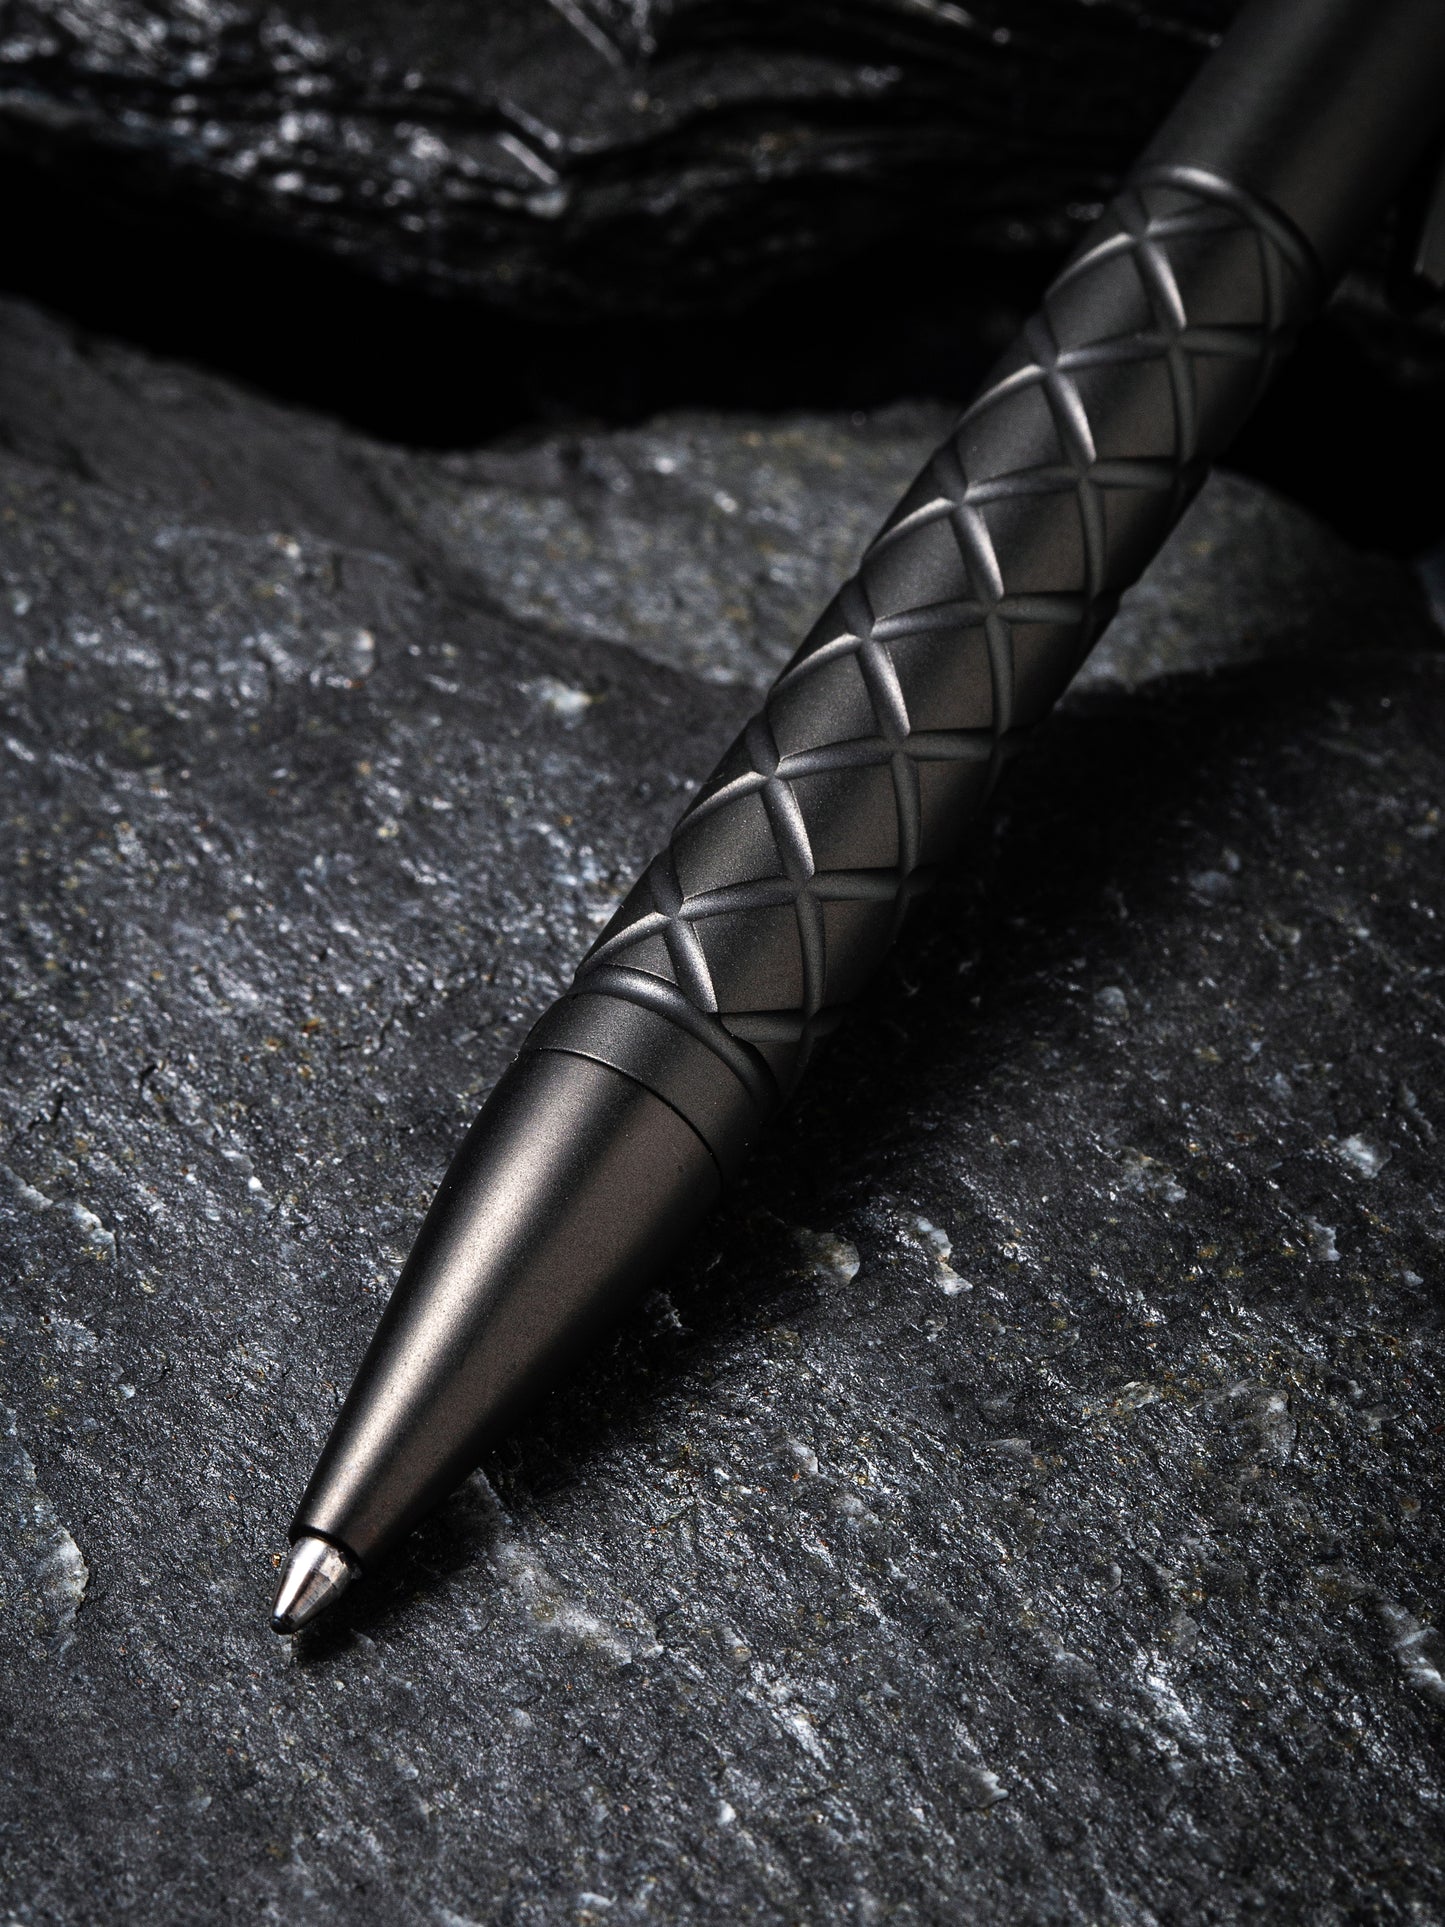 Civivi Coronet 5" Black Titanium Pen with Spinner Bearing Top CP-02B